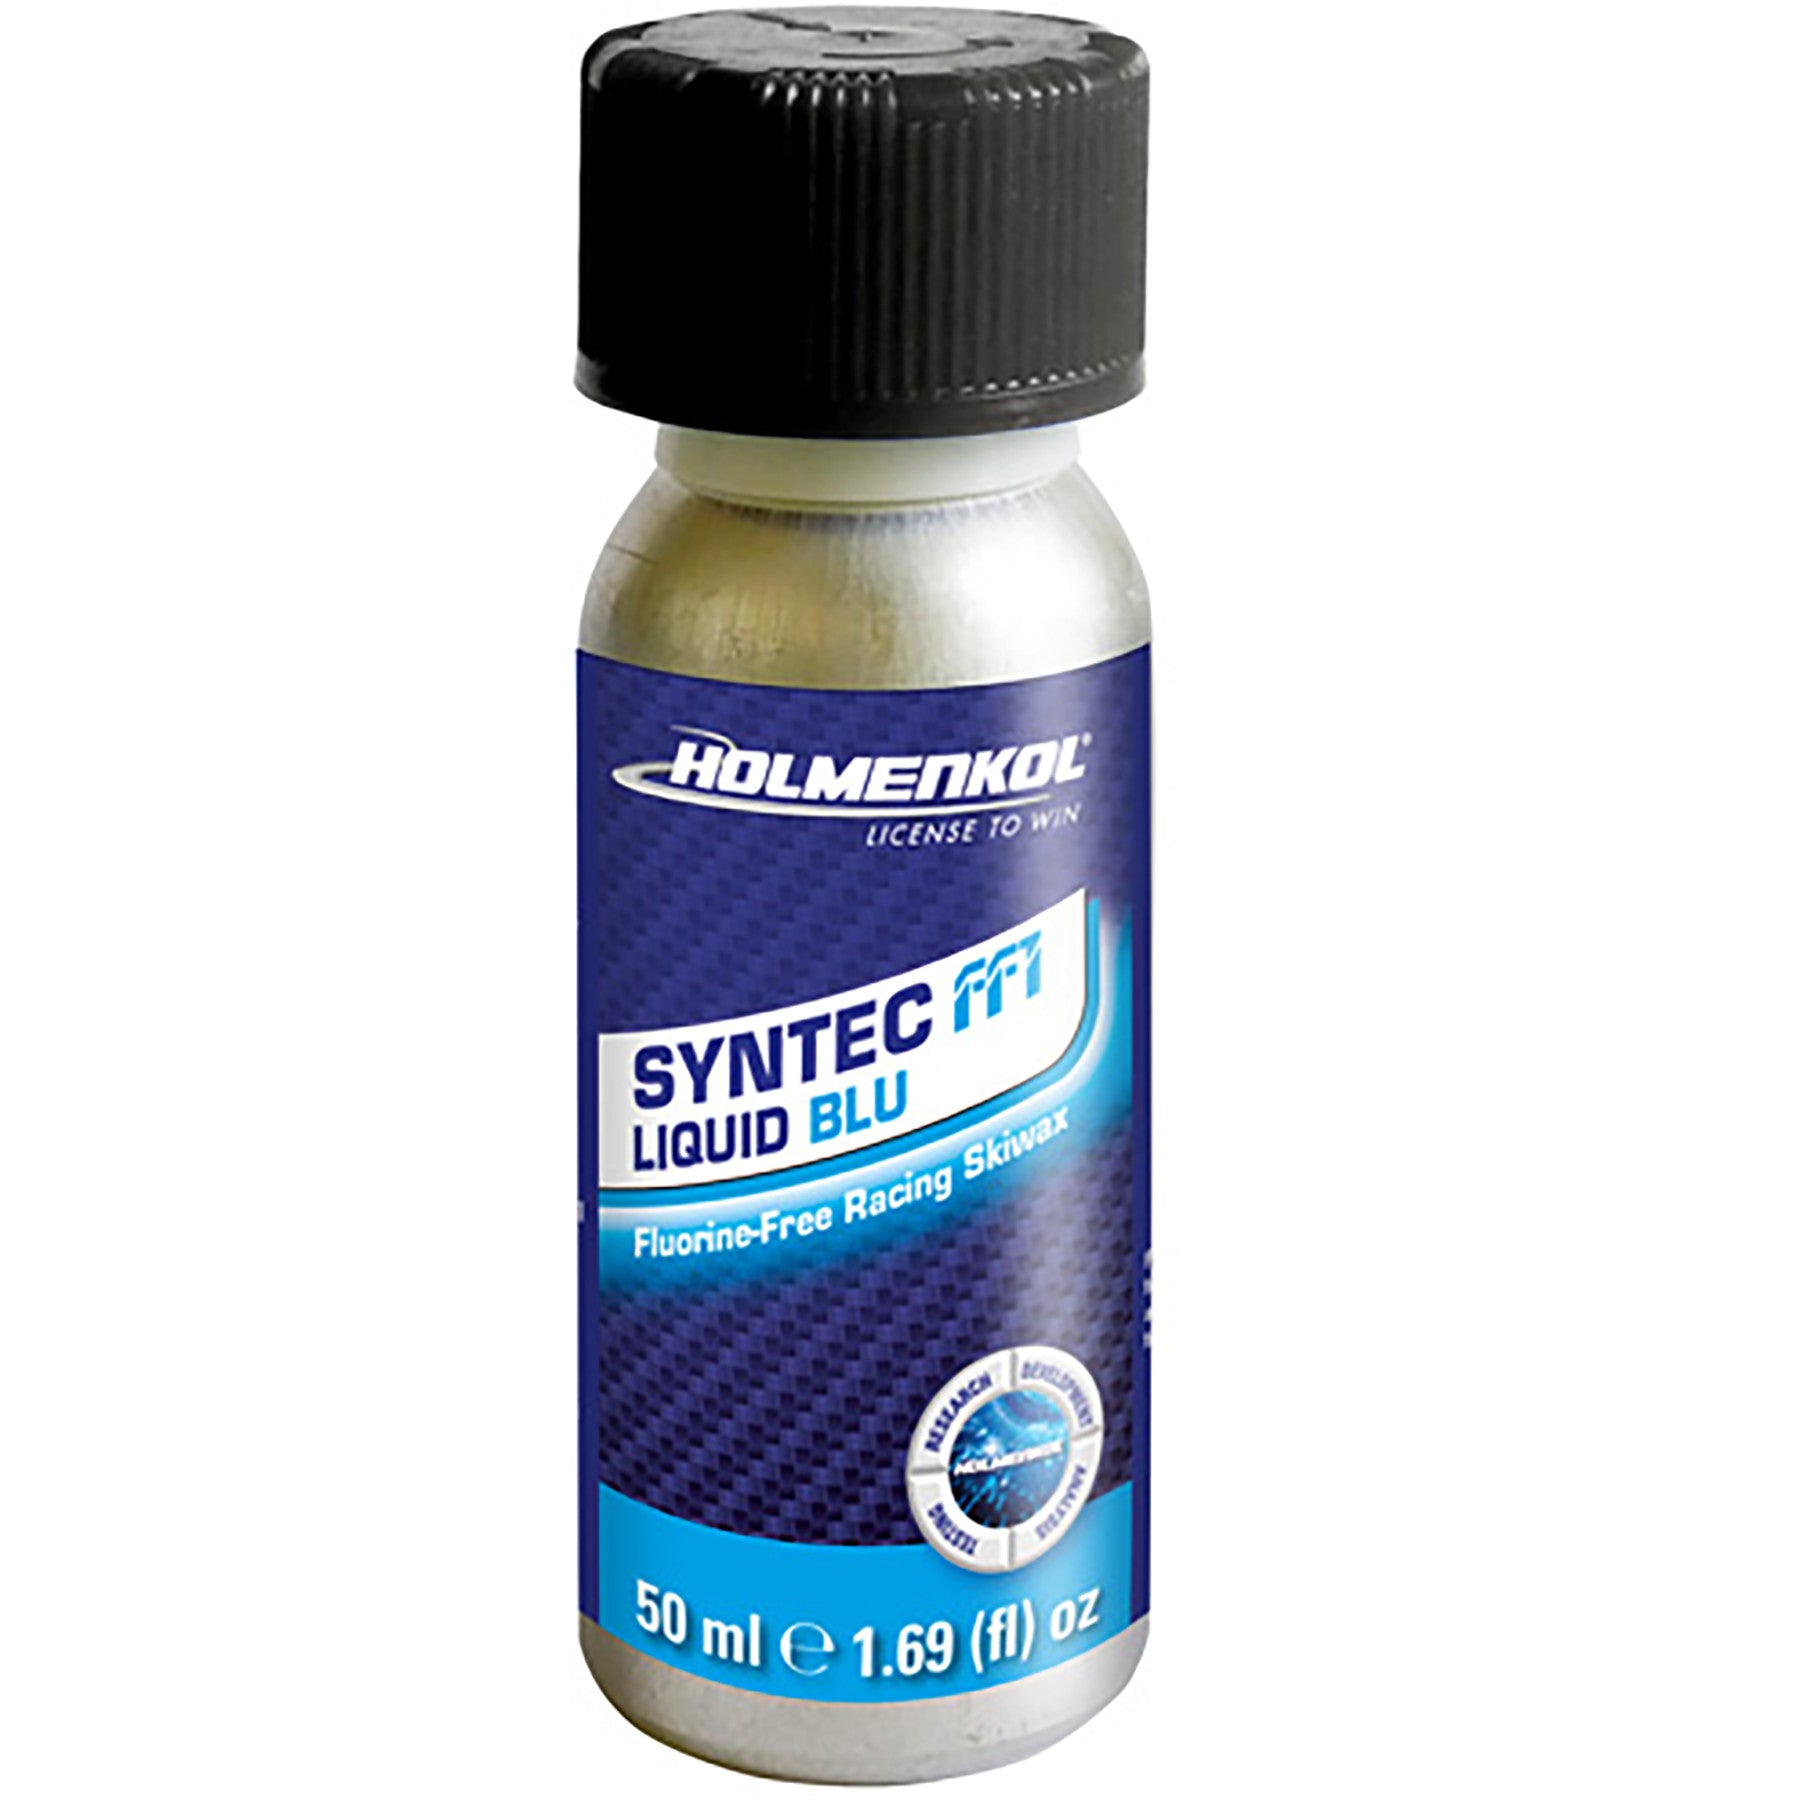 Buy blue Holmenkol Syntec FF1 Liquid Wax